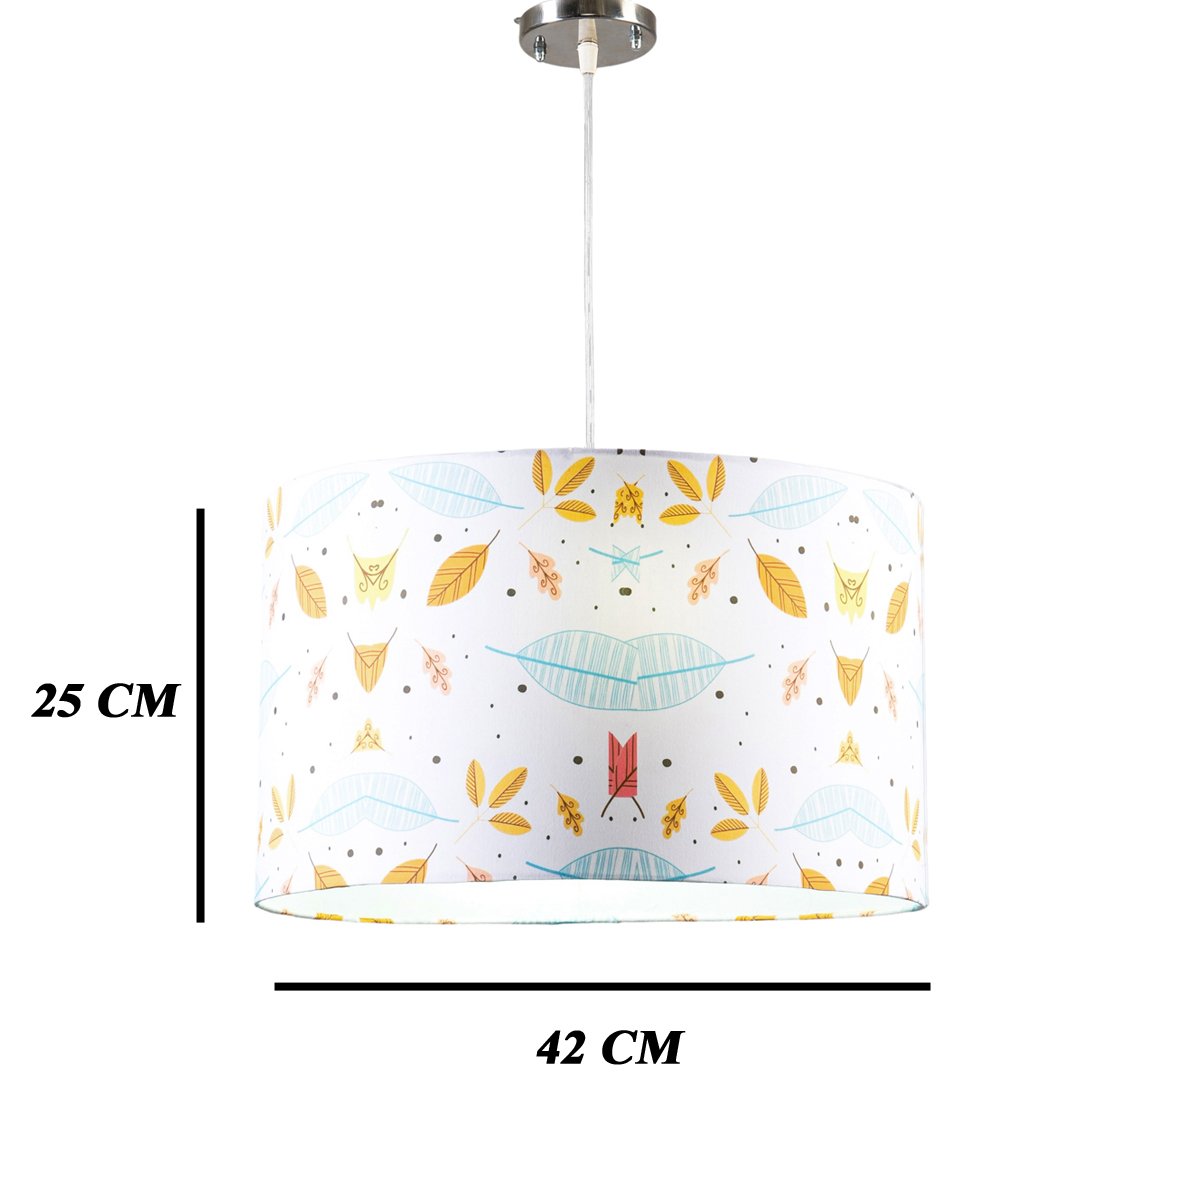 Ceiling lamp - mnta024